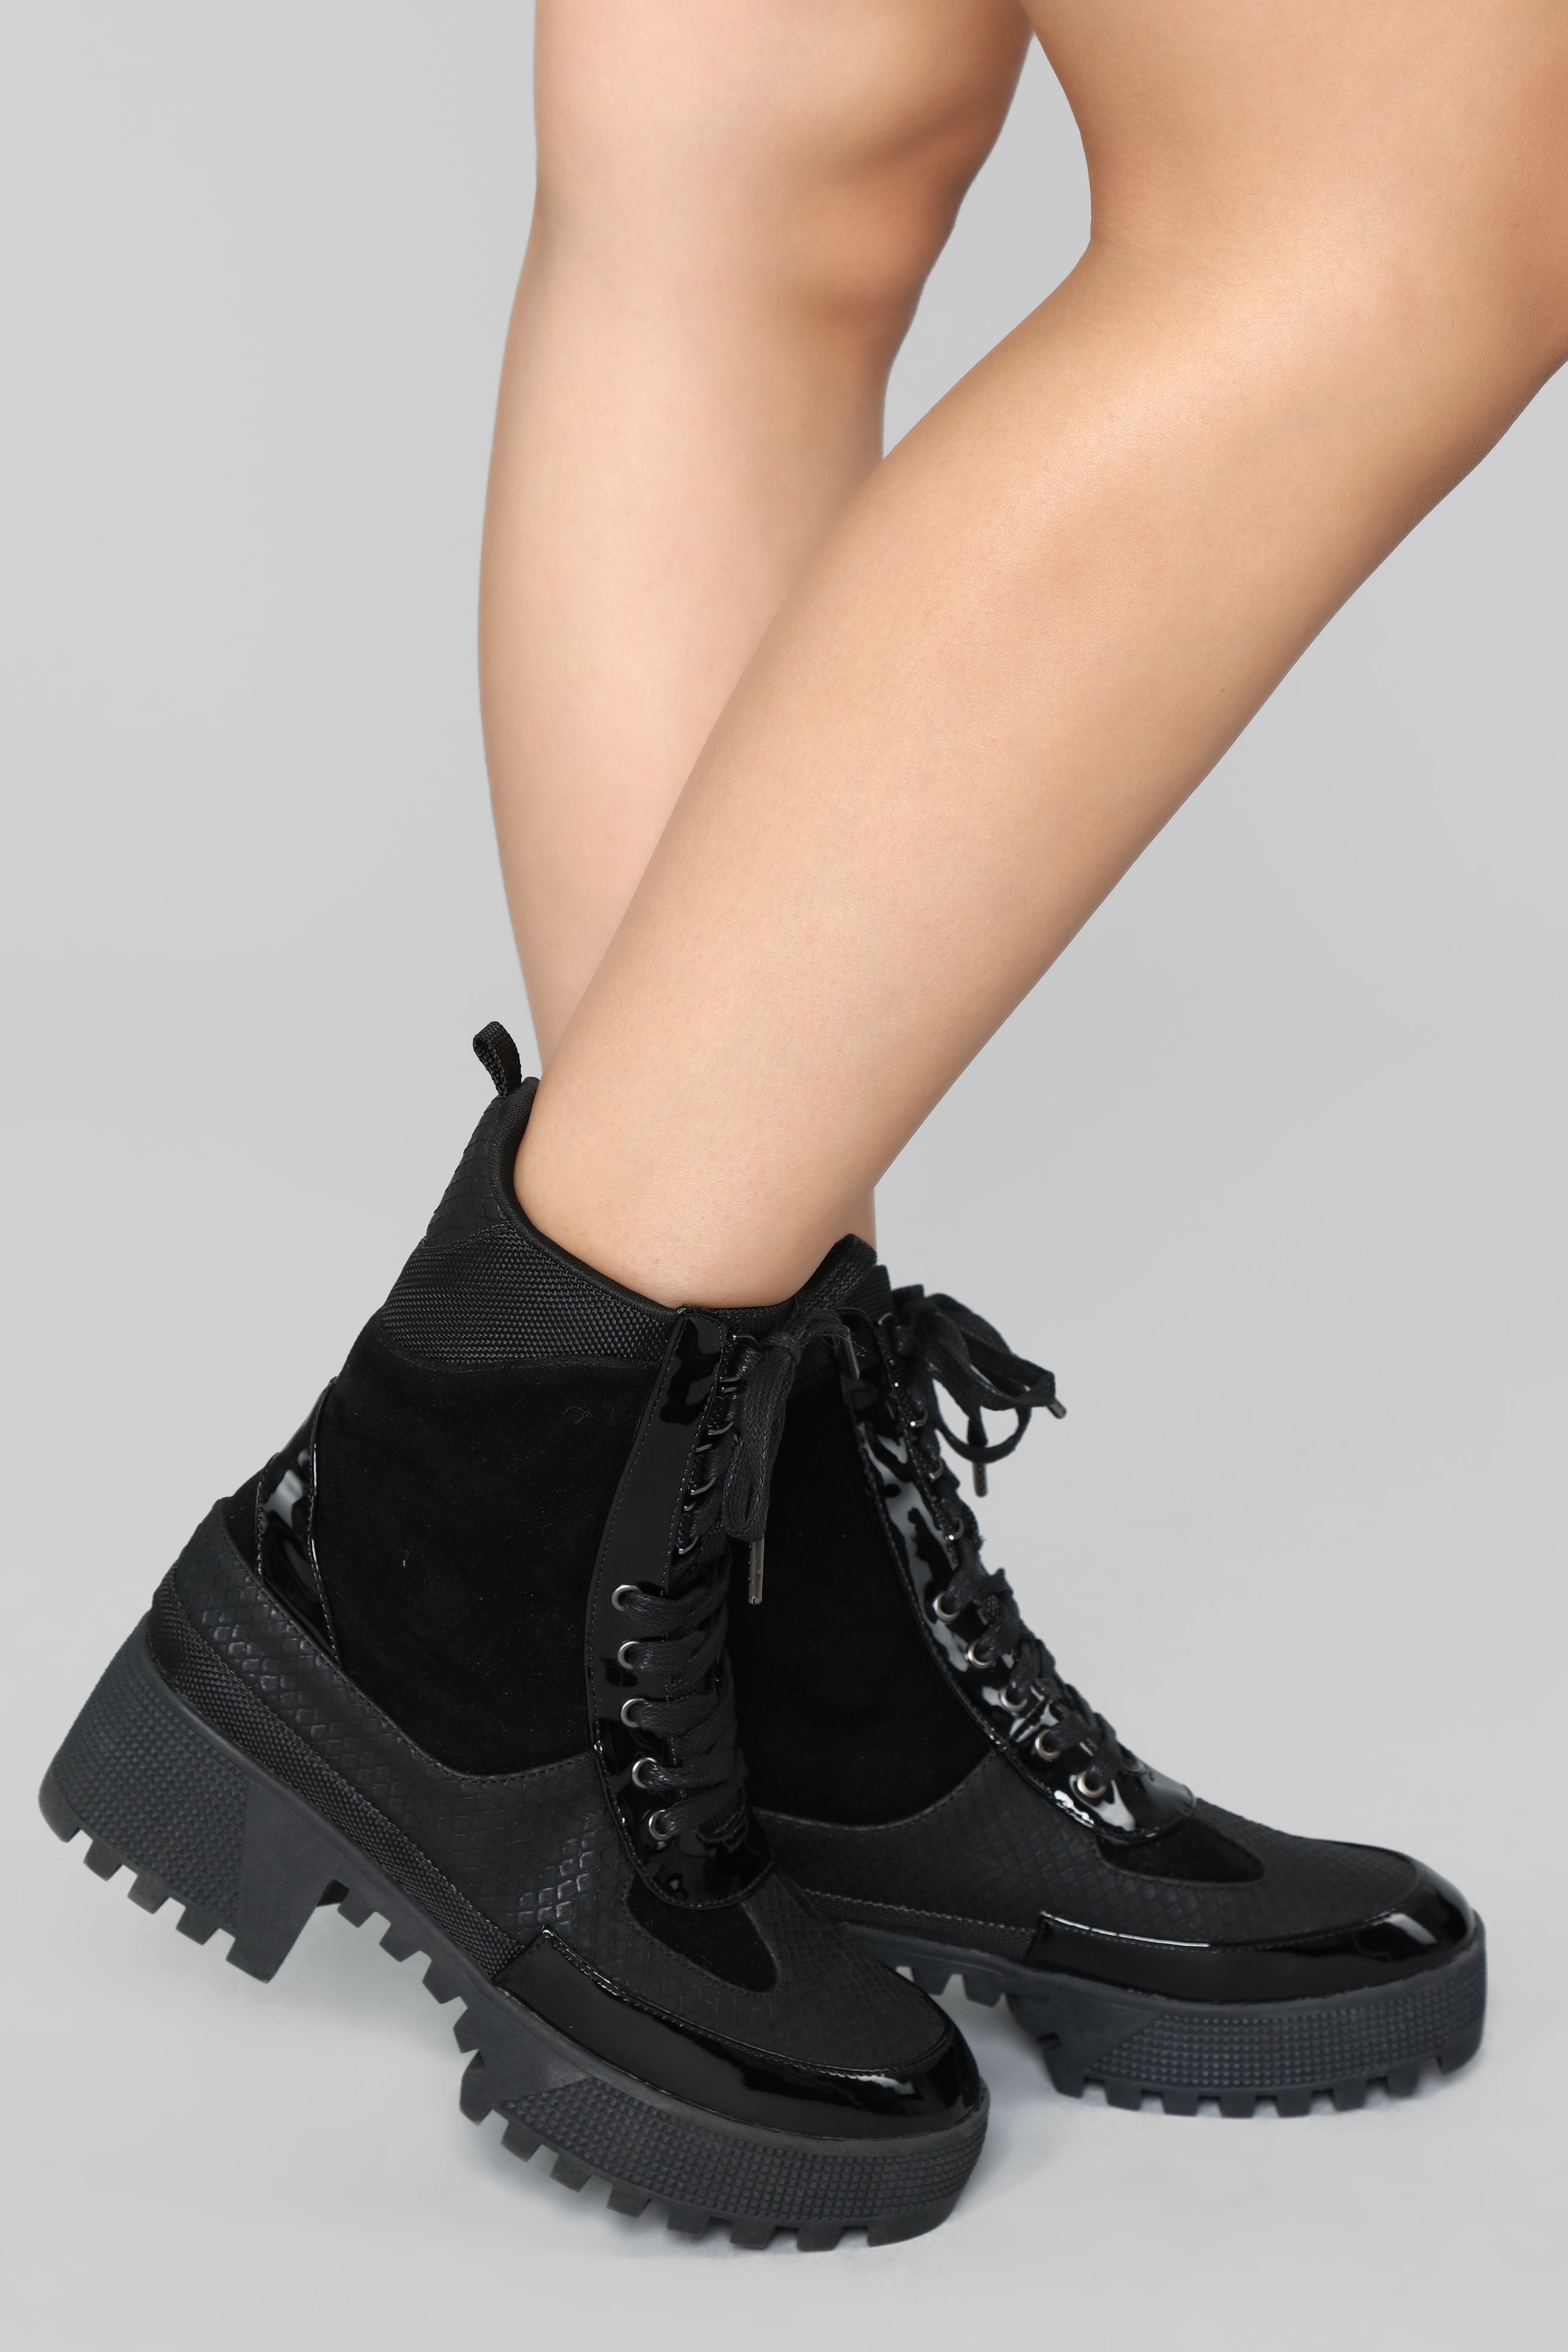 boots fashion nova